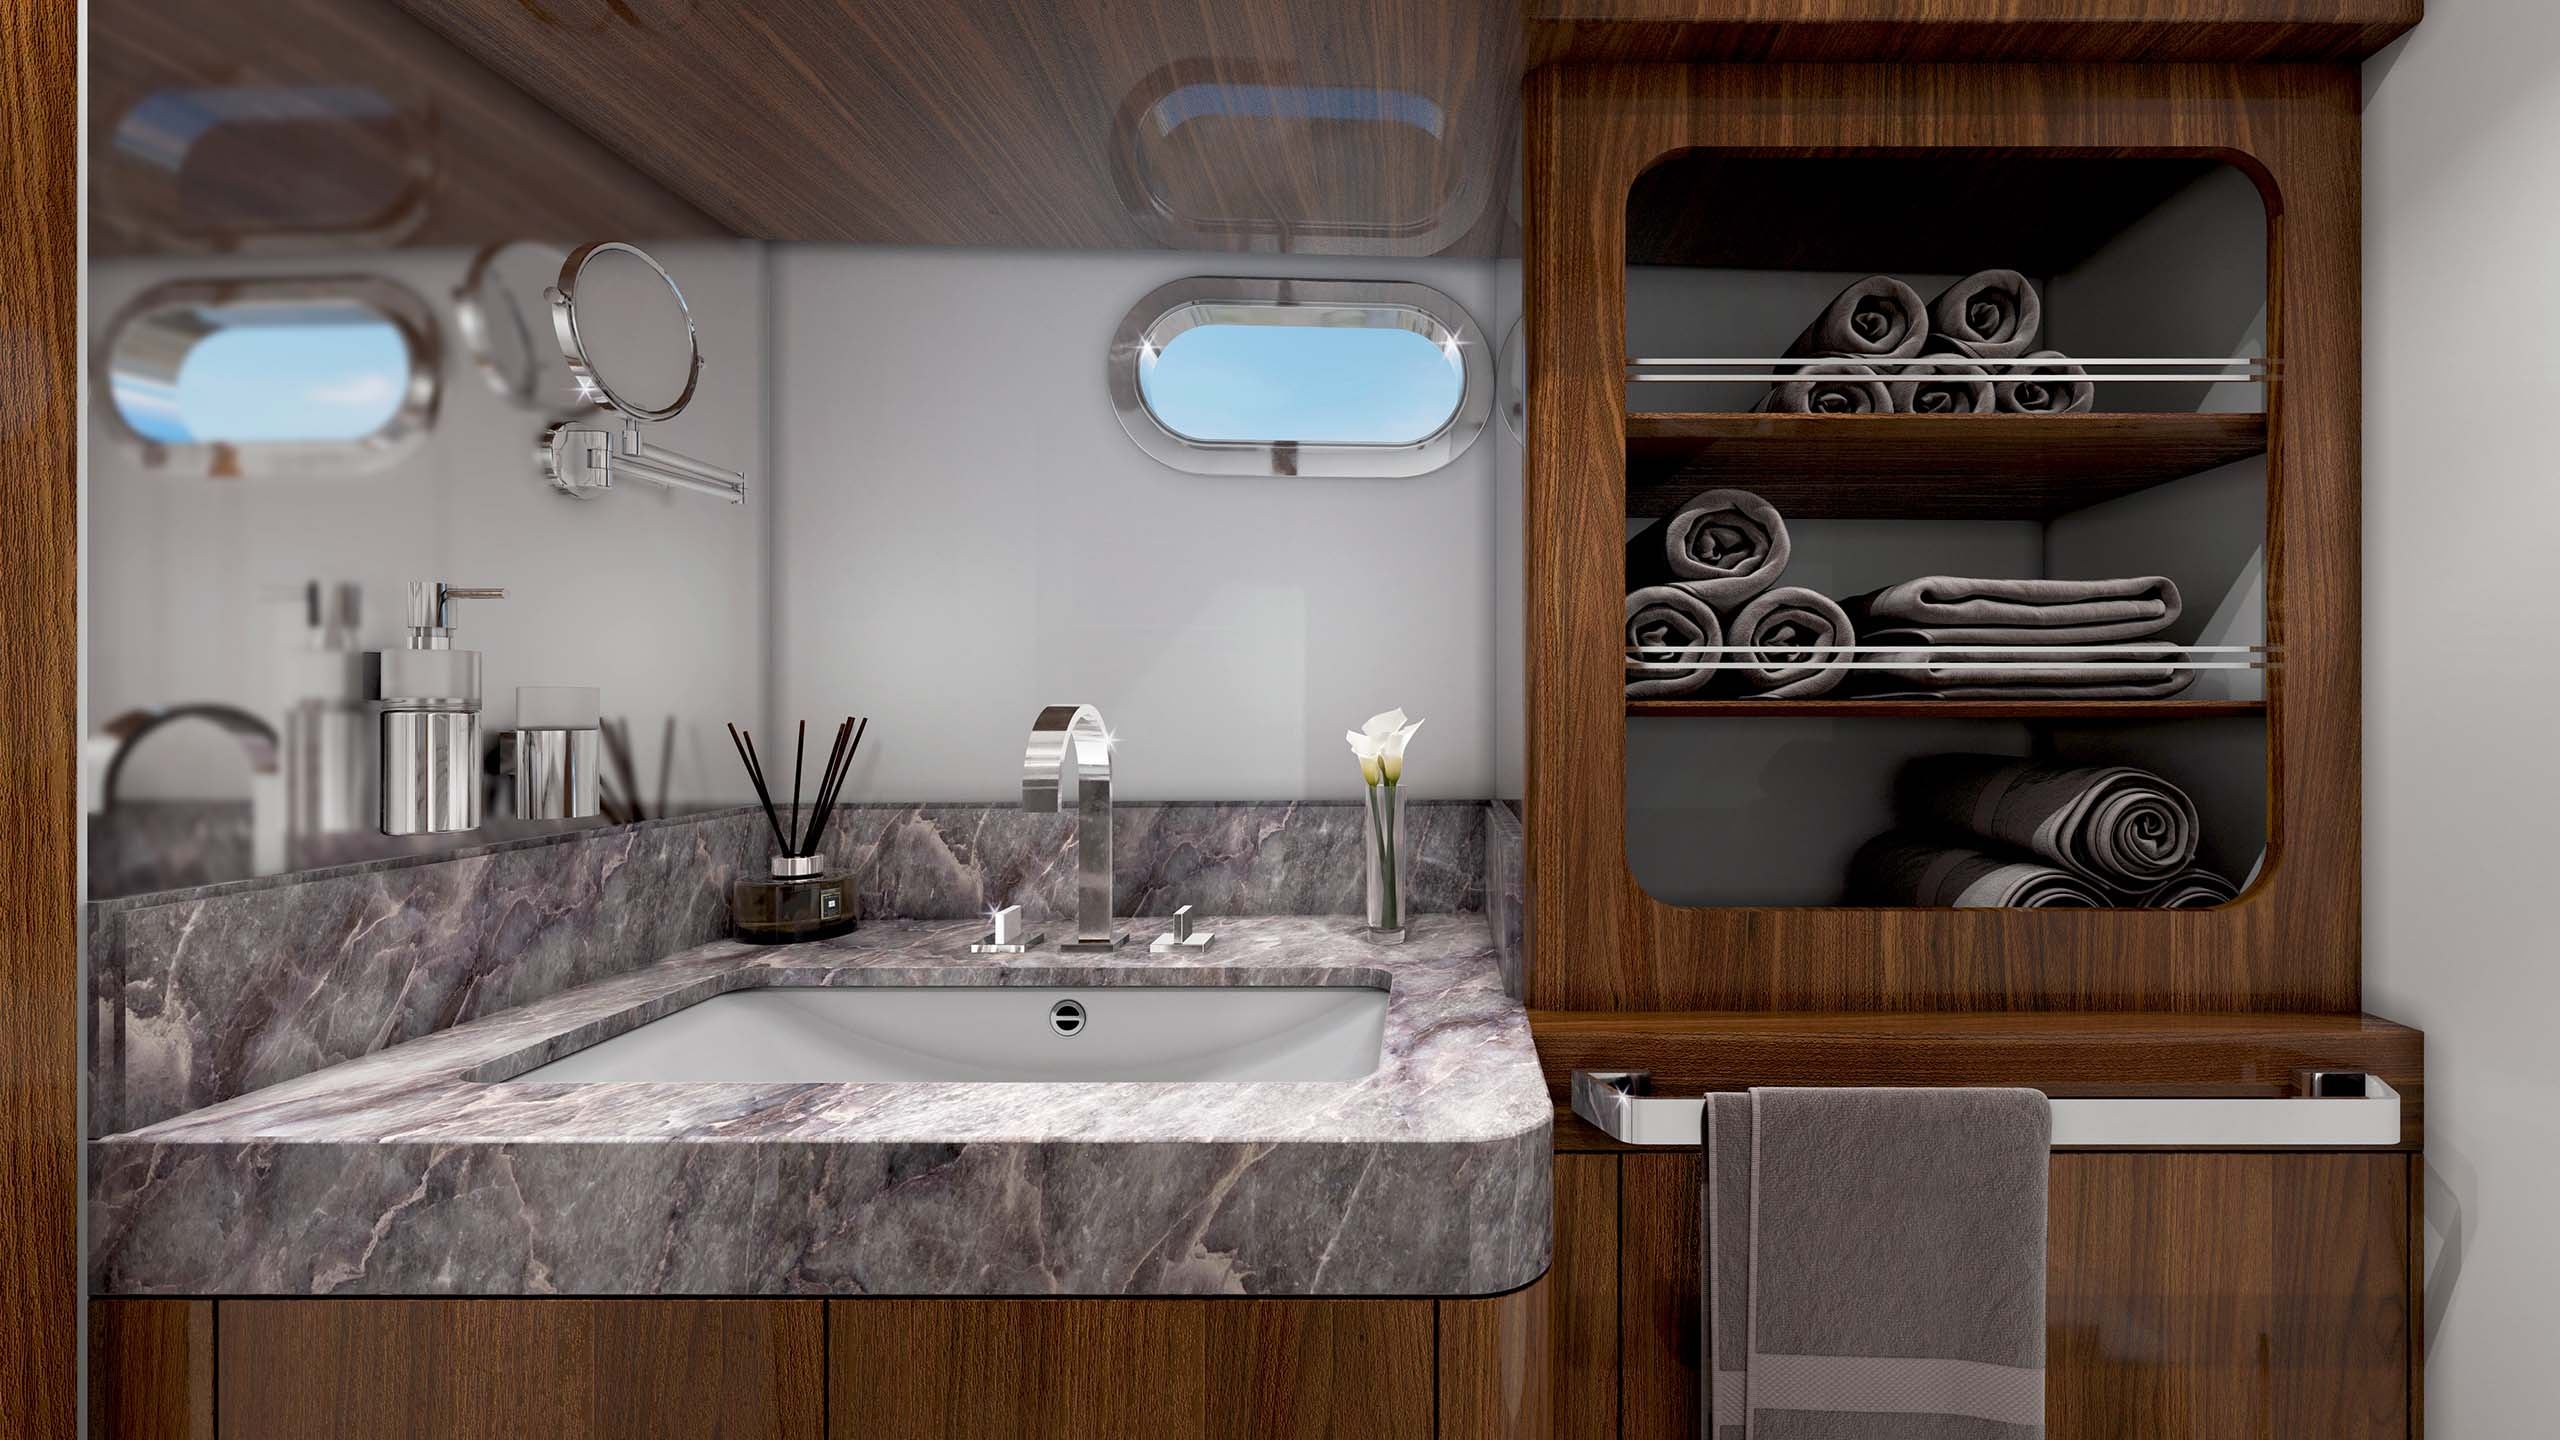 Classic motor yacht bathroom wc interior design by Suvorov Yacht Design